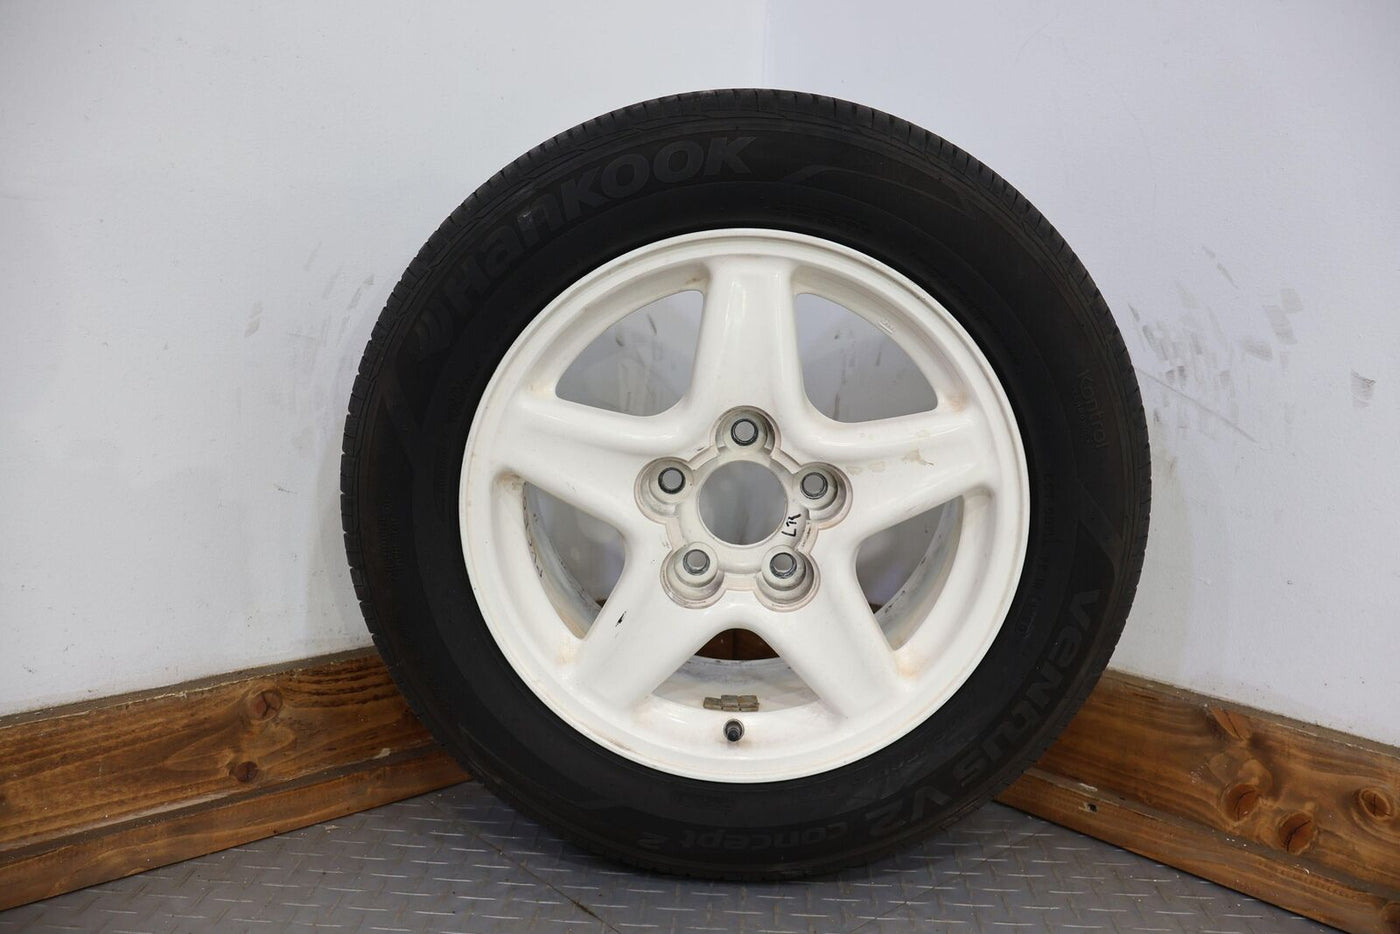 97-99 Chevy Camaro 30th Anniversary 16x8 White Wheels W/ Hankook Tires Set of 4